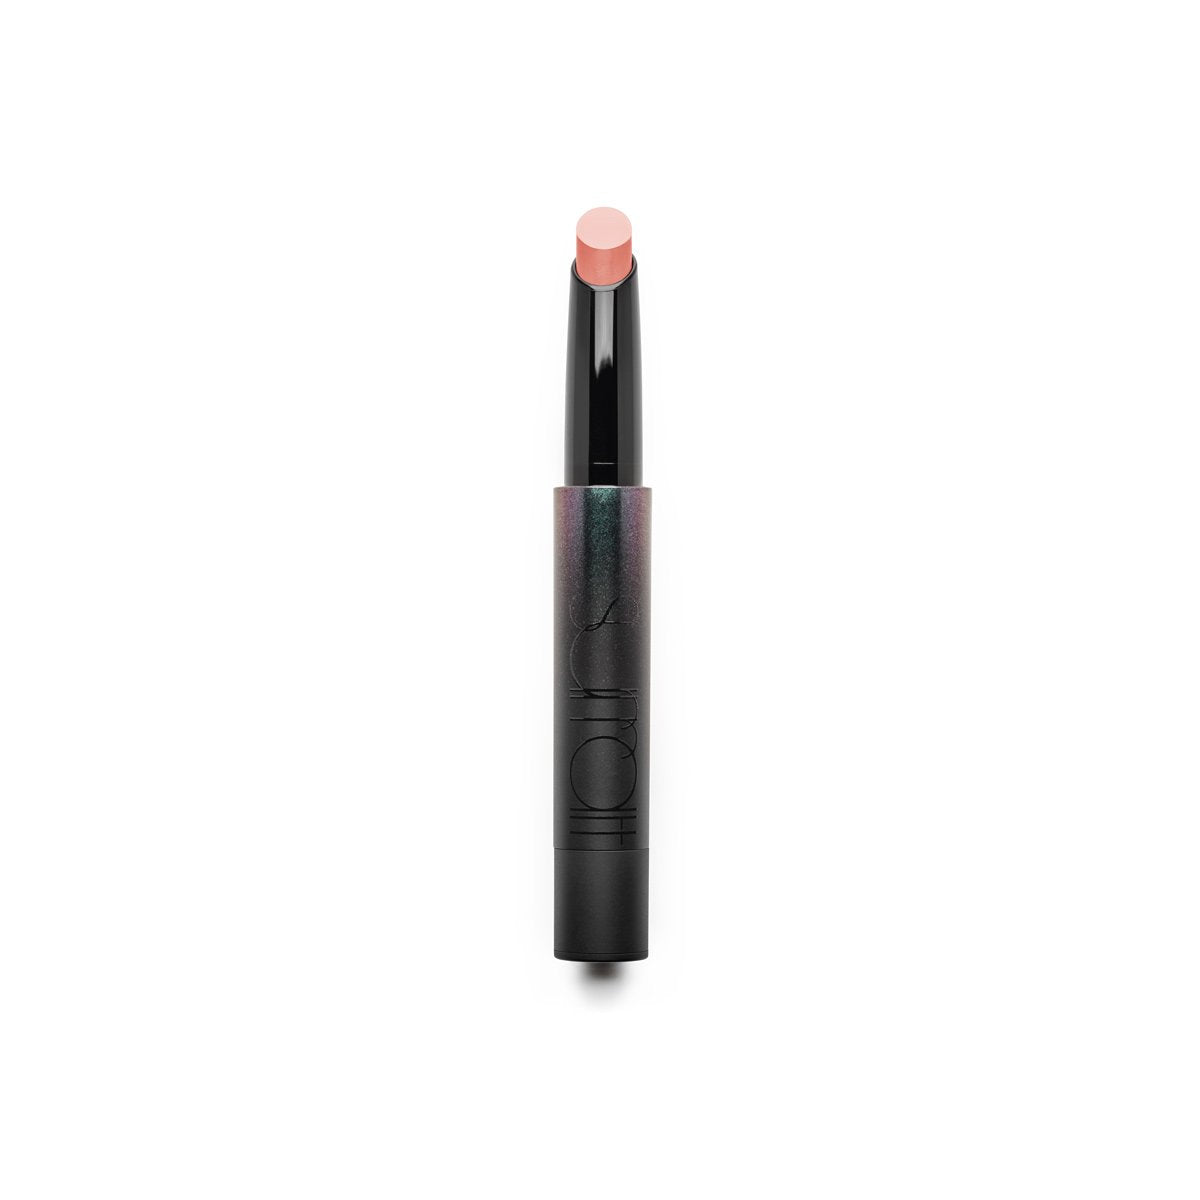 GAMINE - PINK CORAL - creamy moisturizing lipstick lip balm in pink coral shade